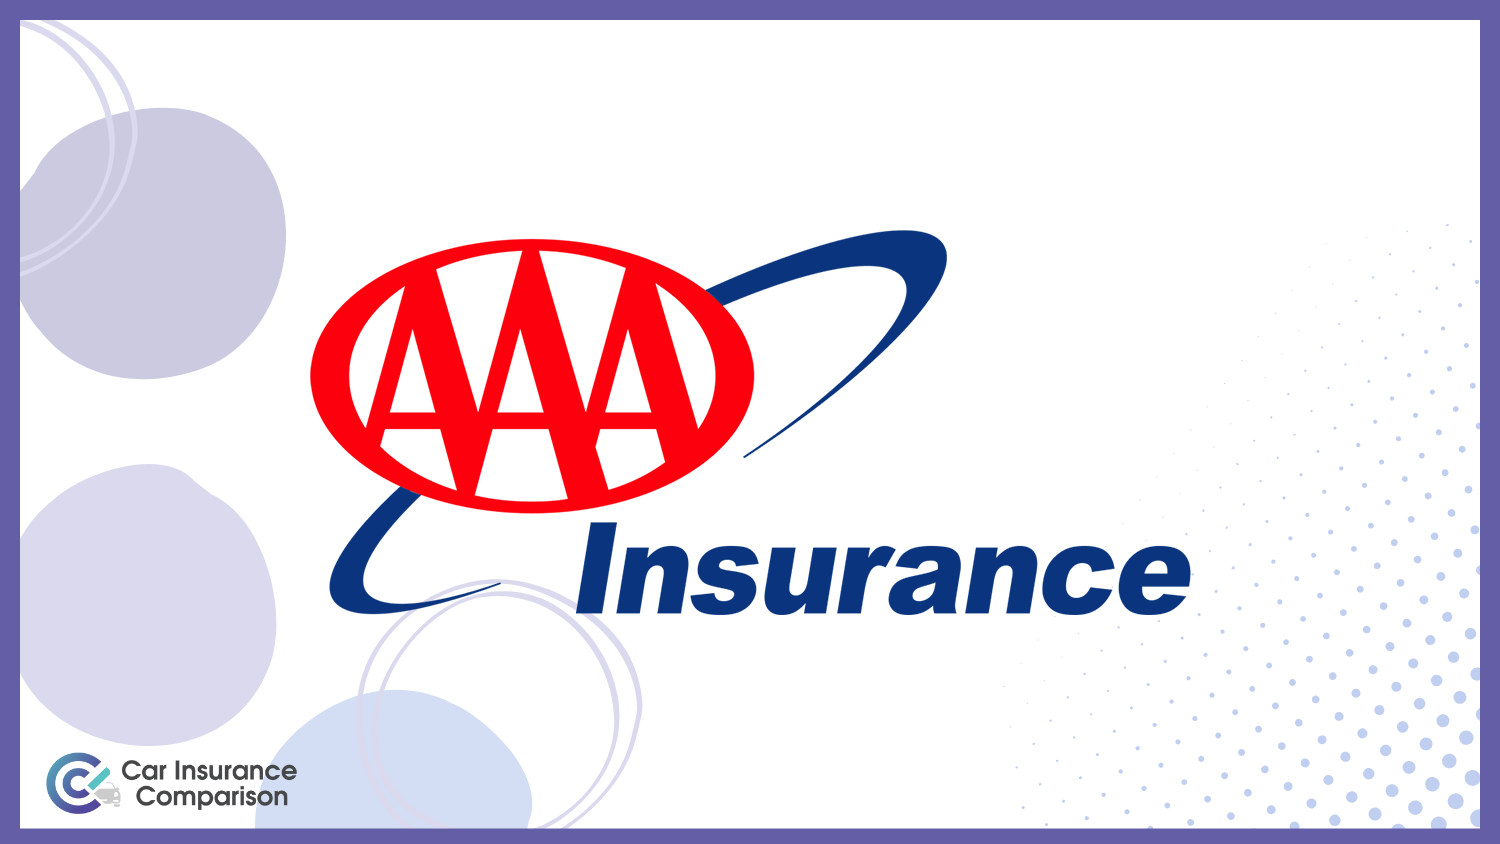 AAA: Best Classic Car Insurance